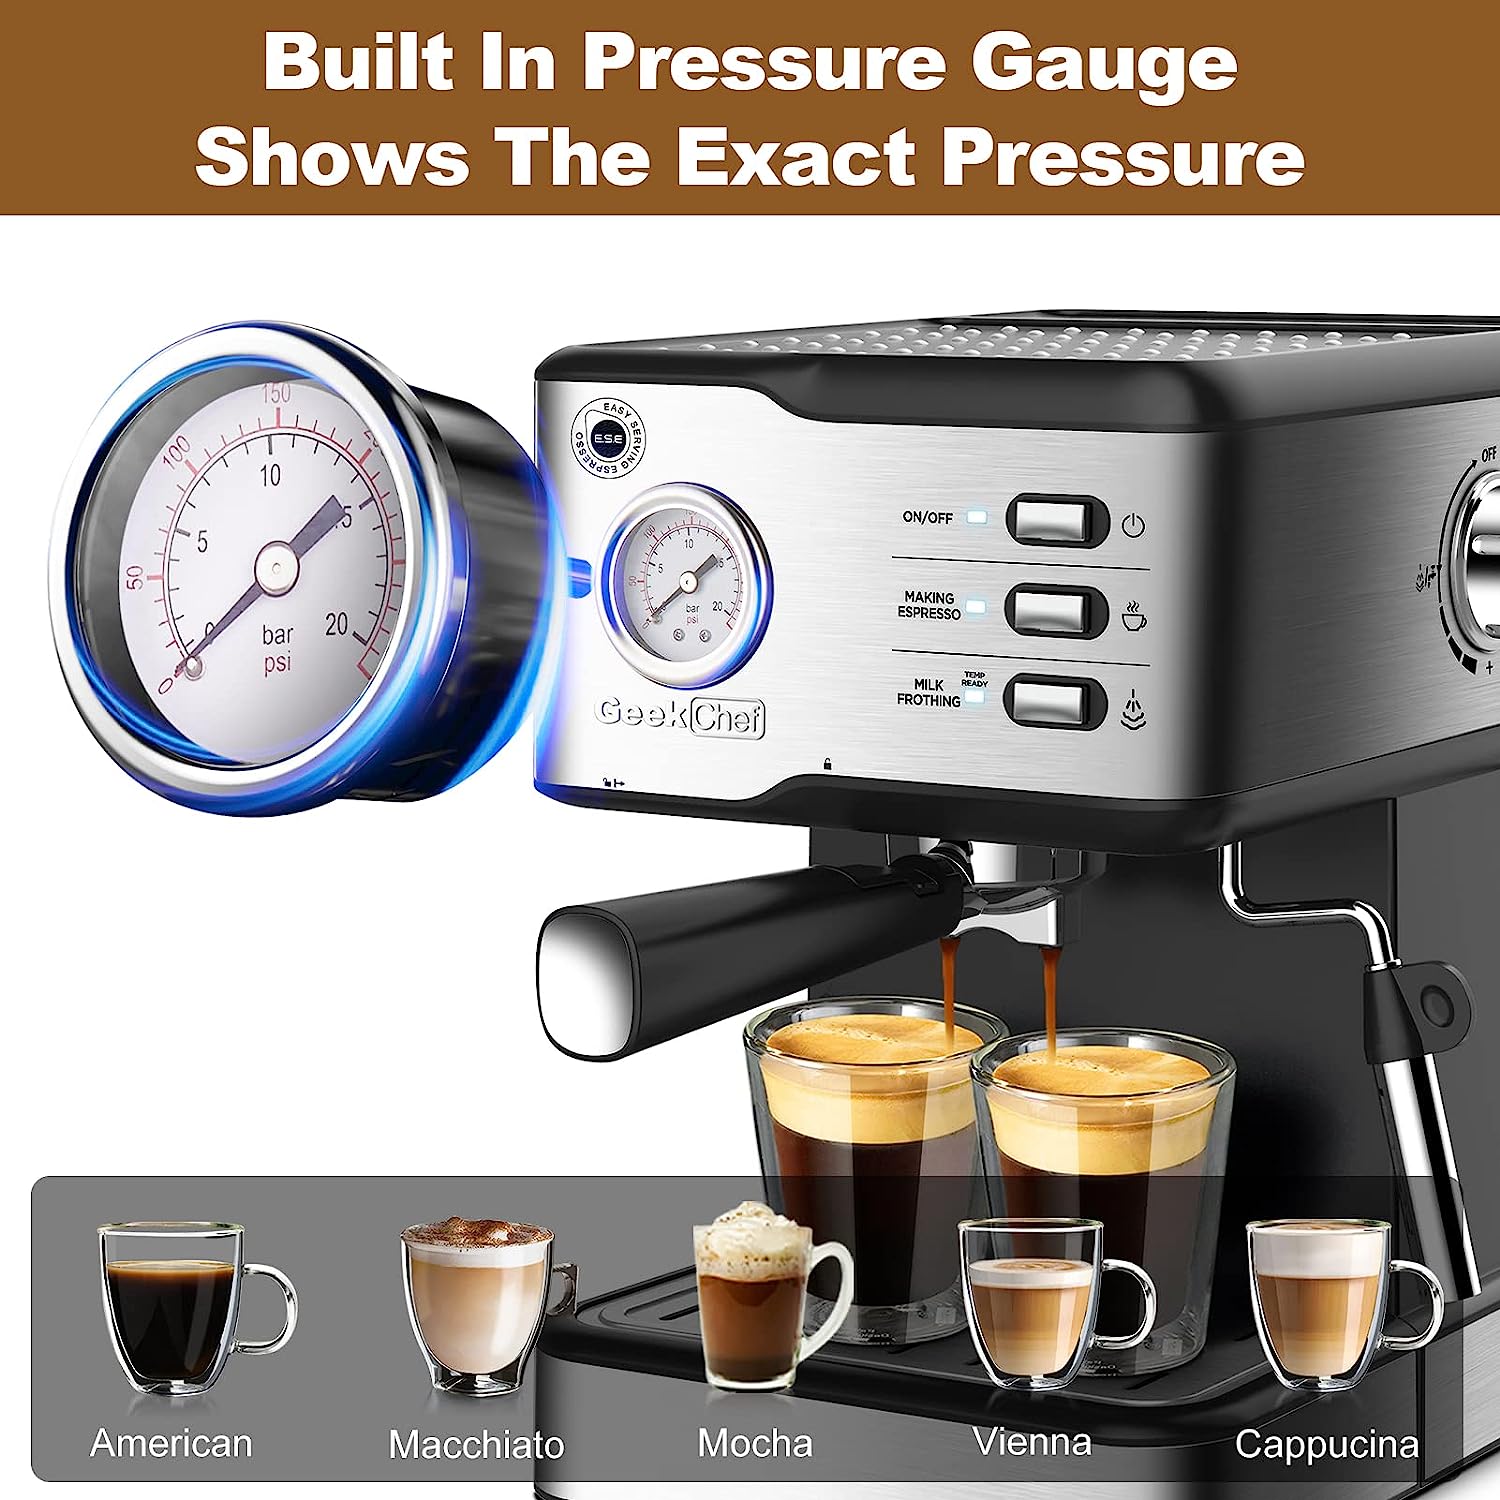 Geek Chef 20 Bar Pump Espresso Cappuccino latte Coffee Maker with